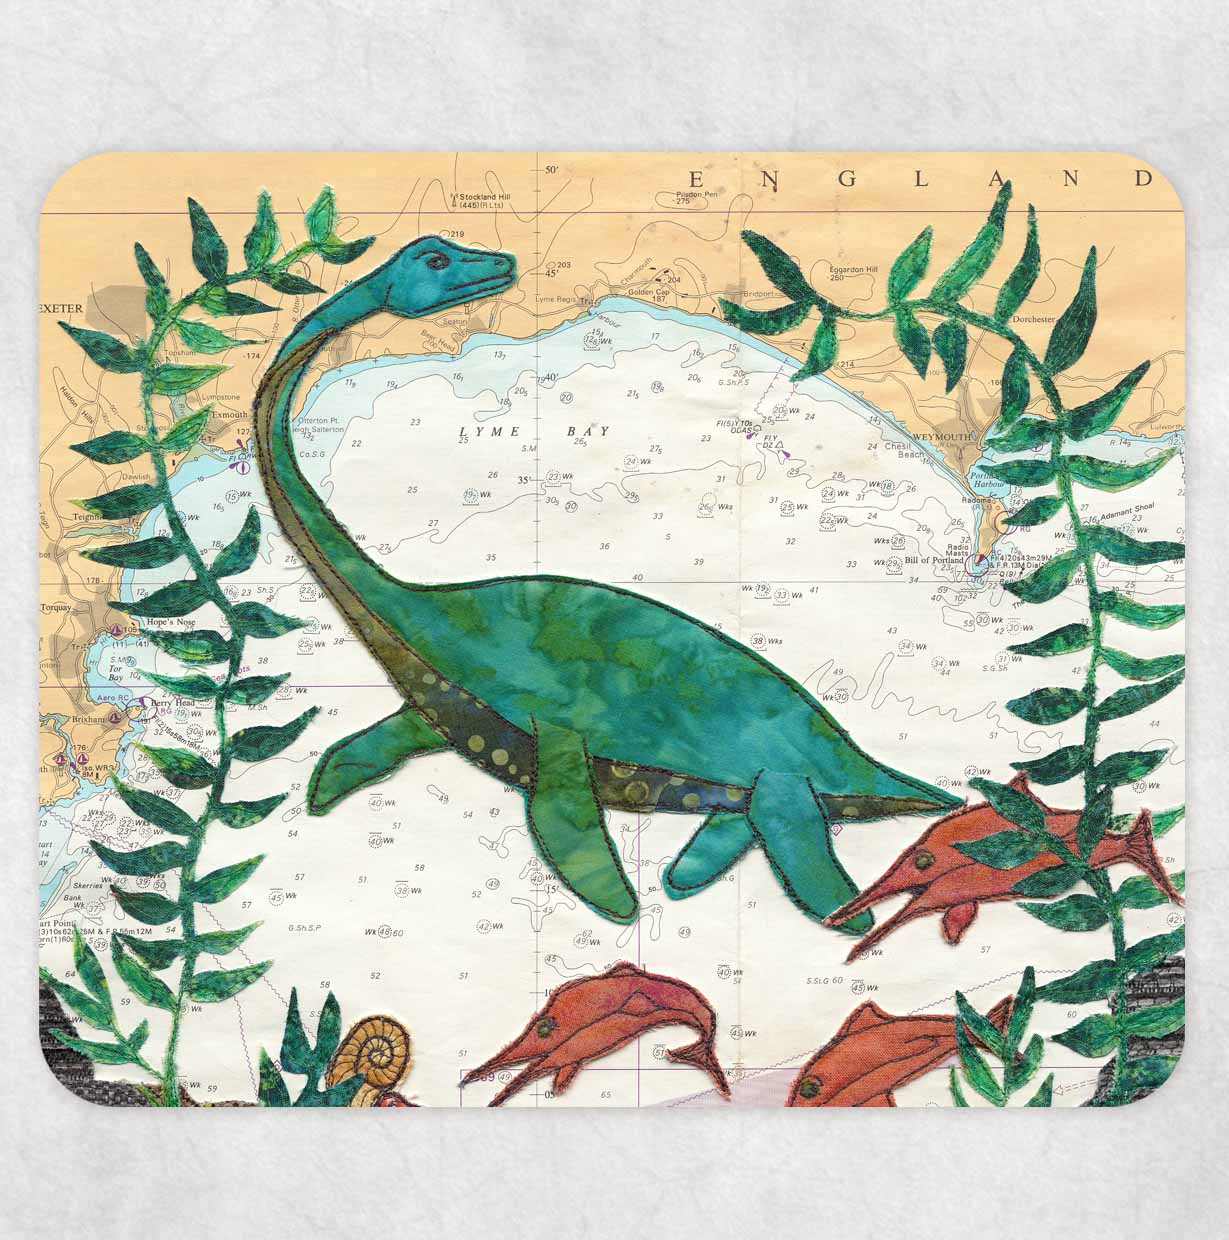 Jurassic Coast placemat by Hannah Wisdom Textiles